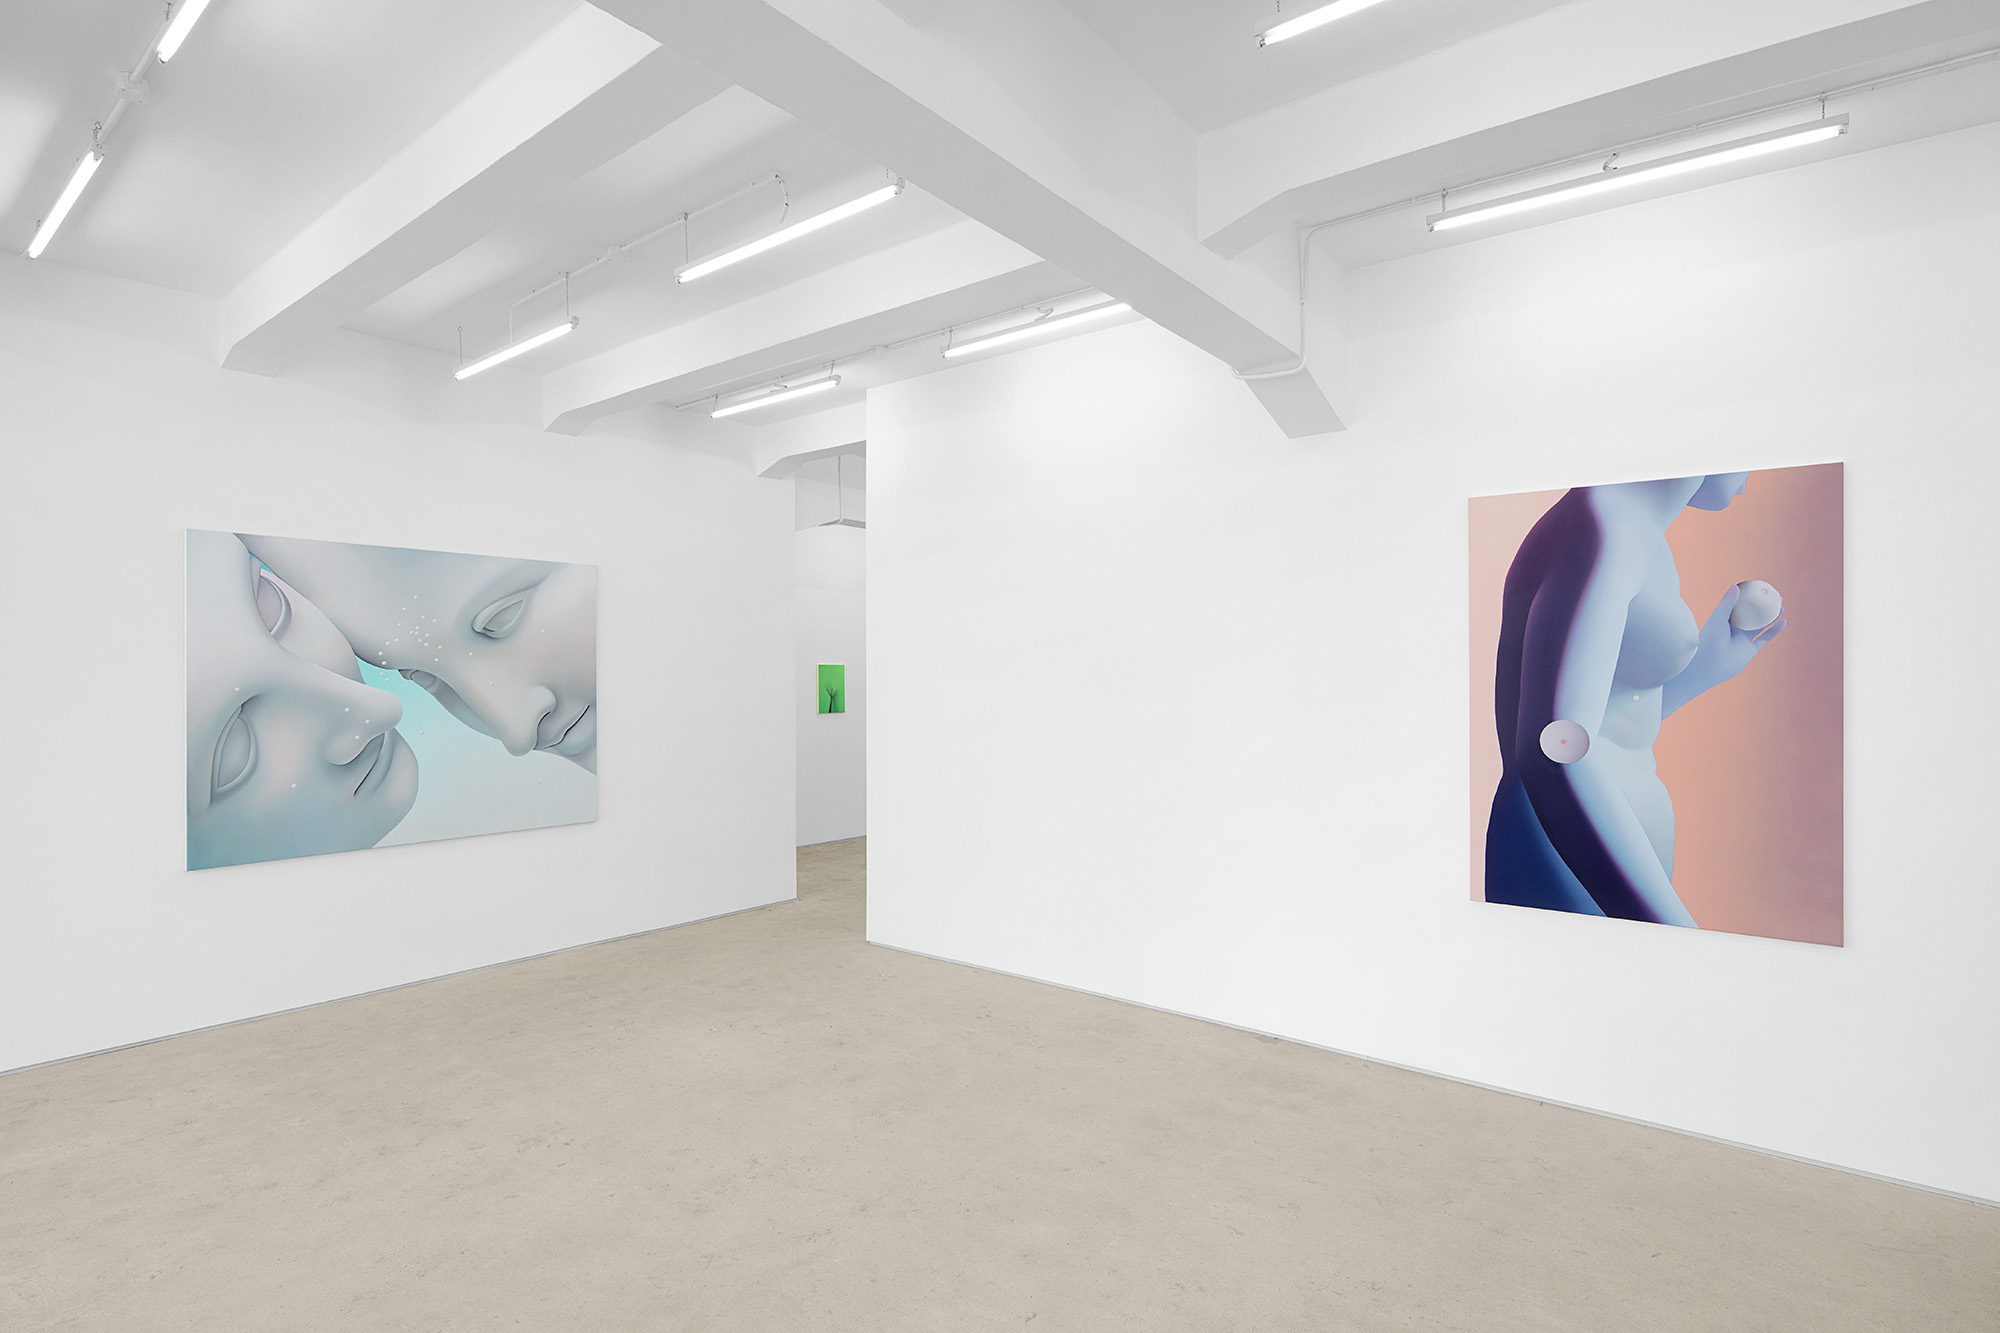 Vivian Greven, The Negatives, solo exhibition at Gallery Vacancy, installation view 12